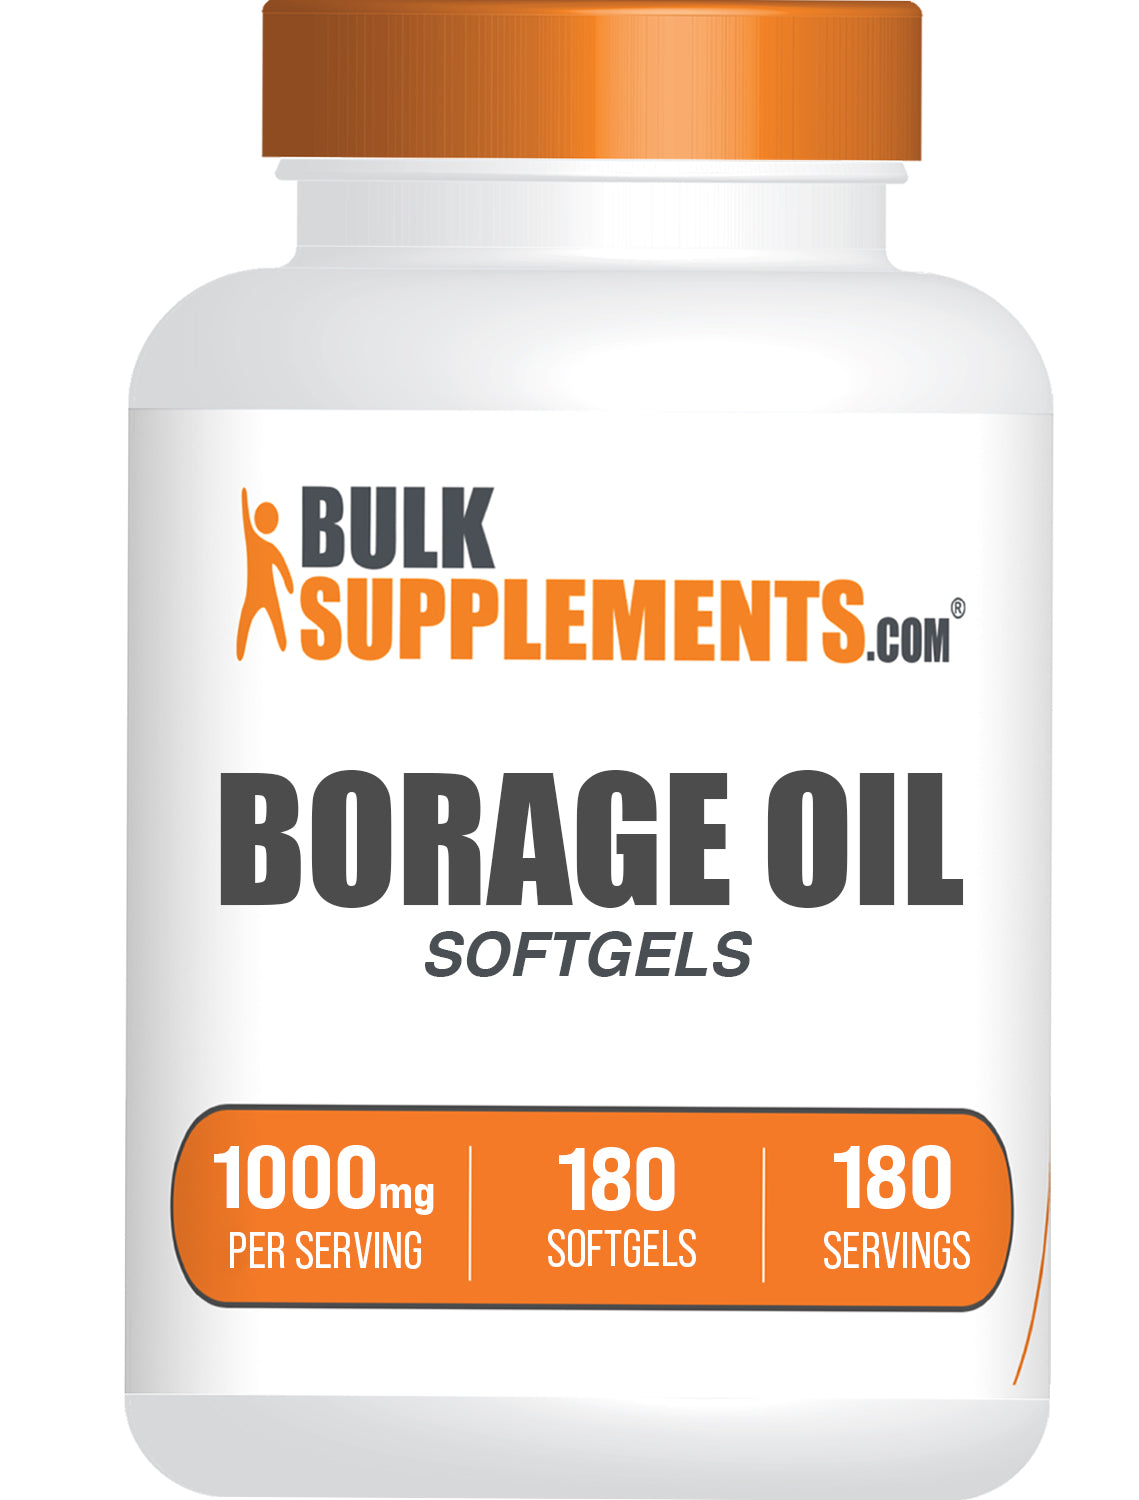 Borage Oil Softgels